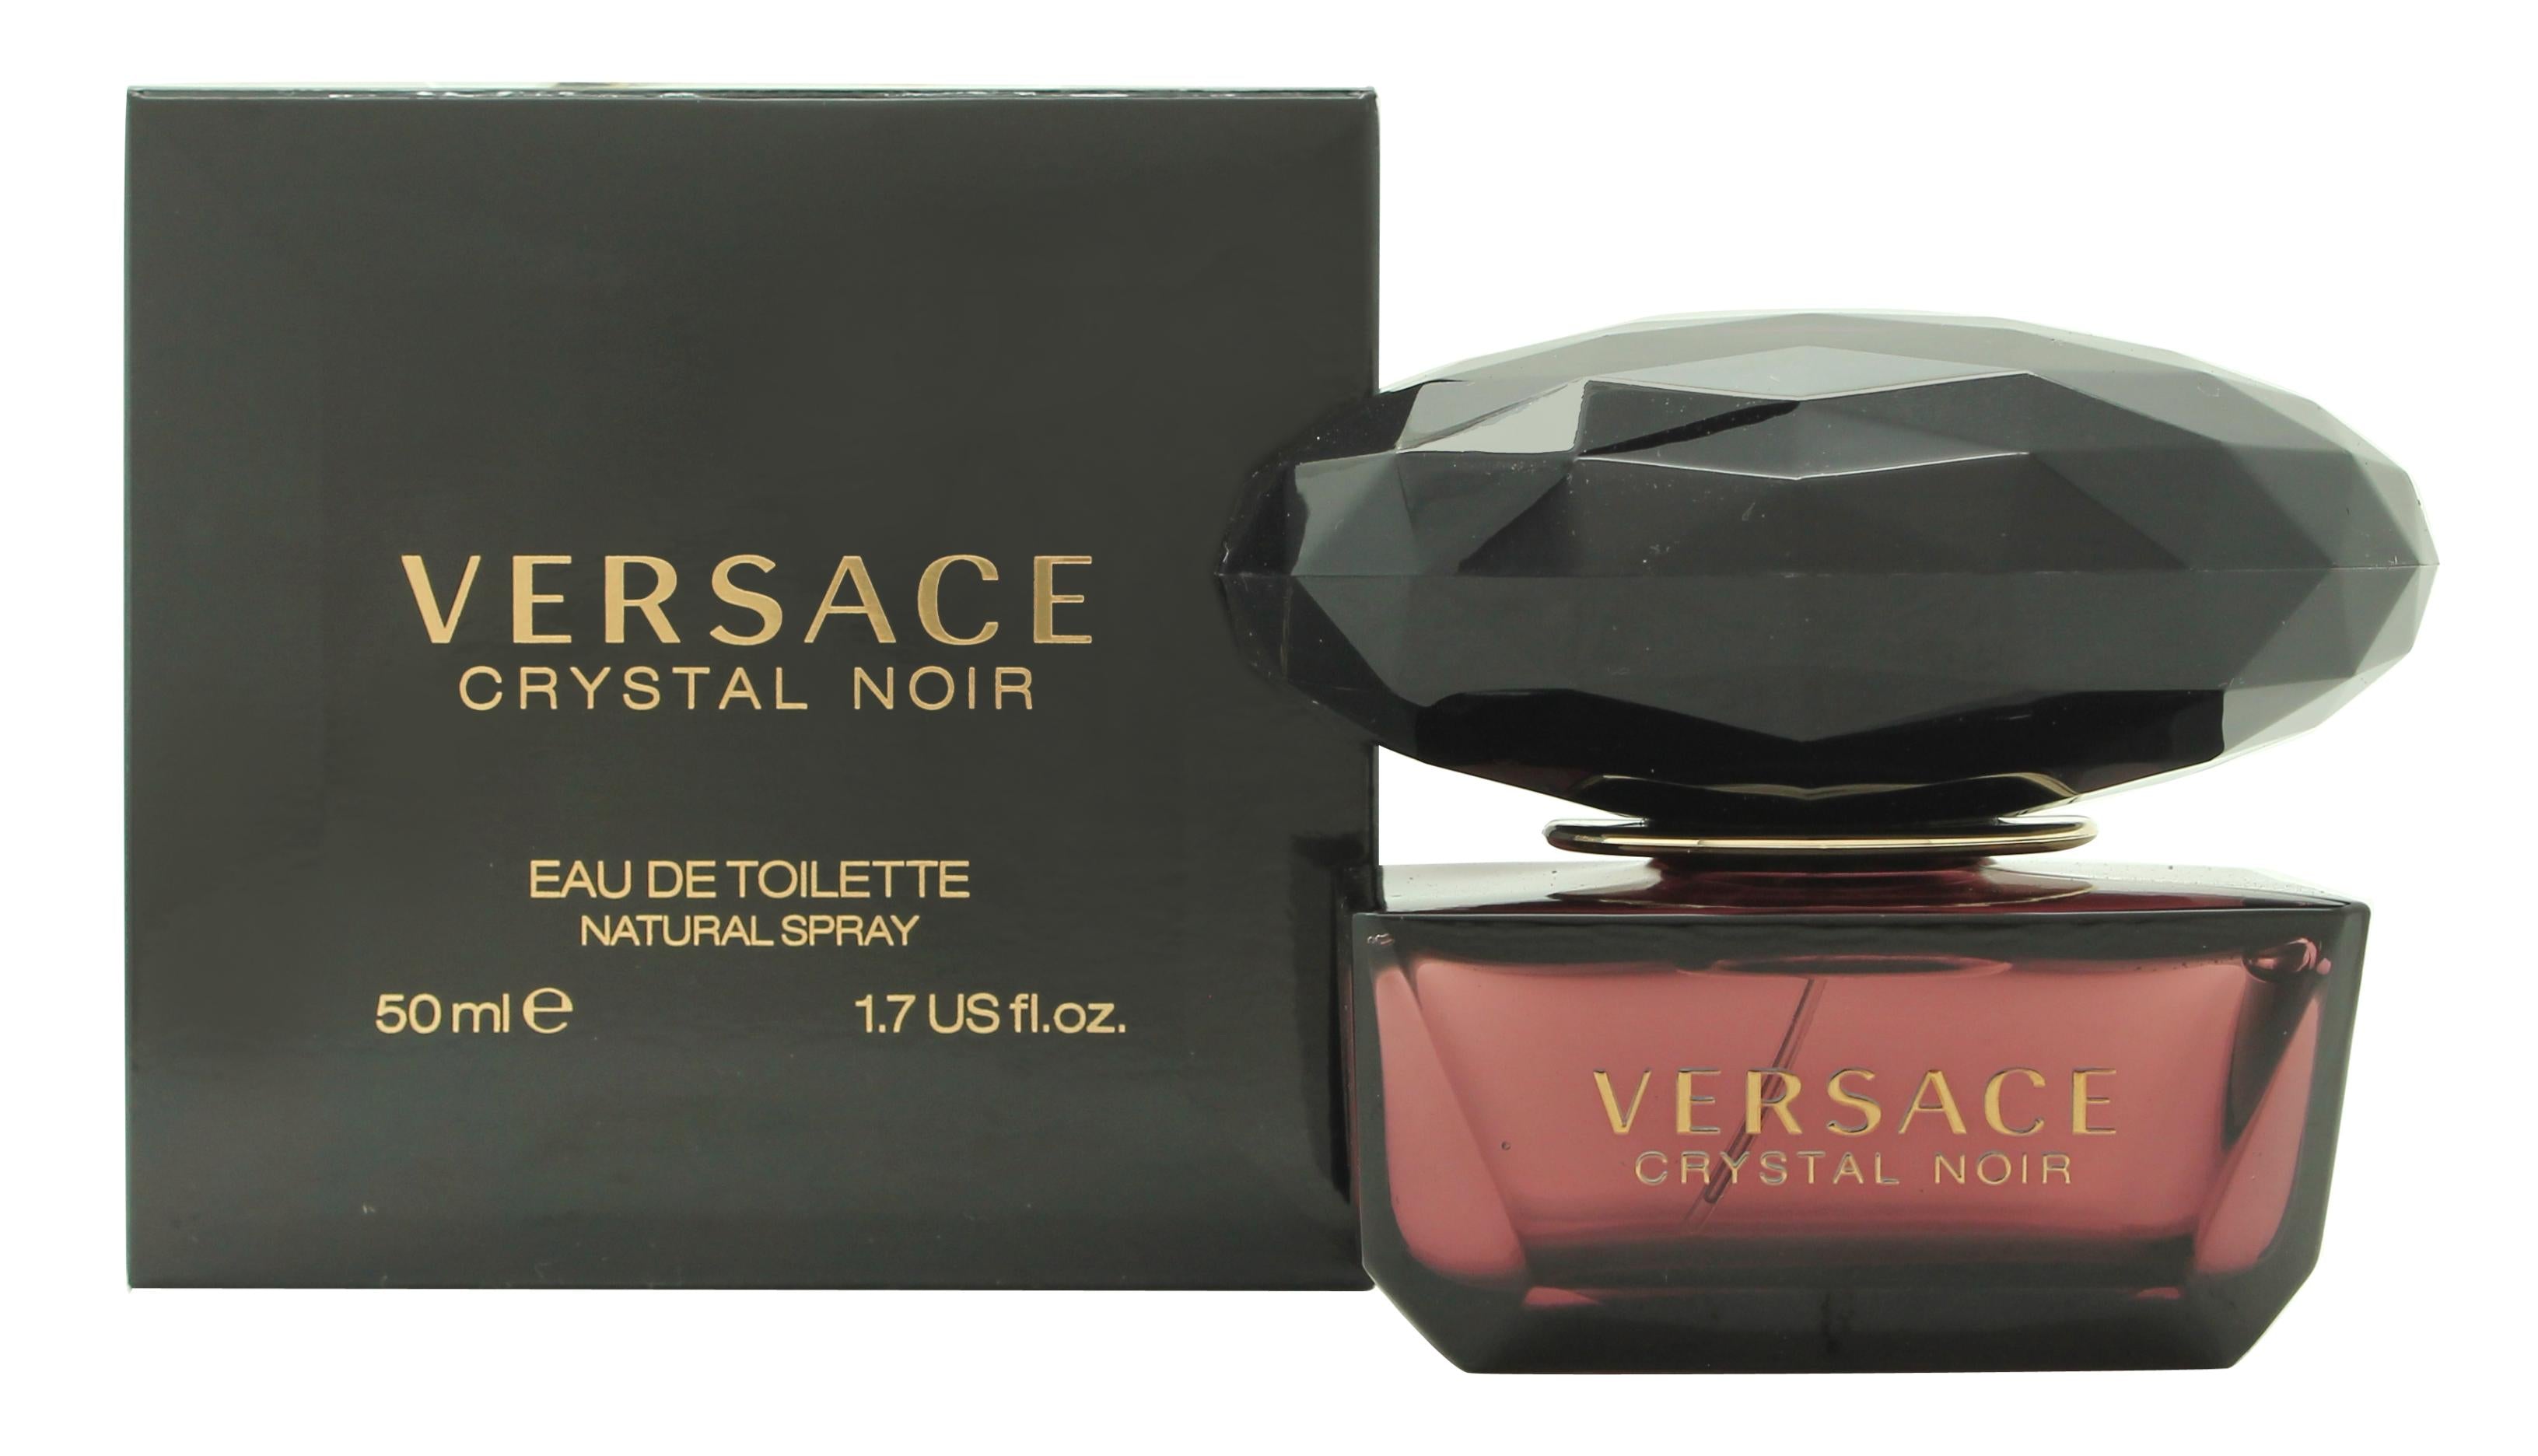 View Versace Crystal Noir Eau de Toilette 50ml Spray information